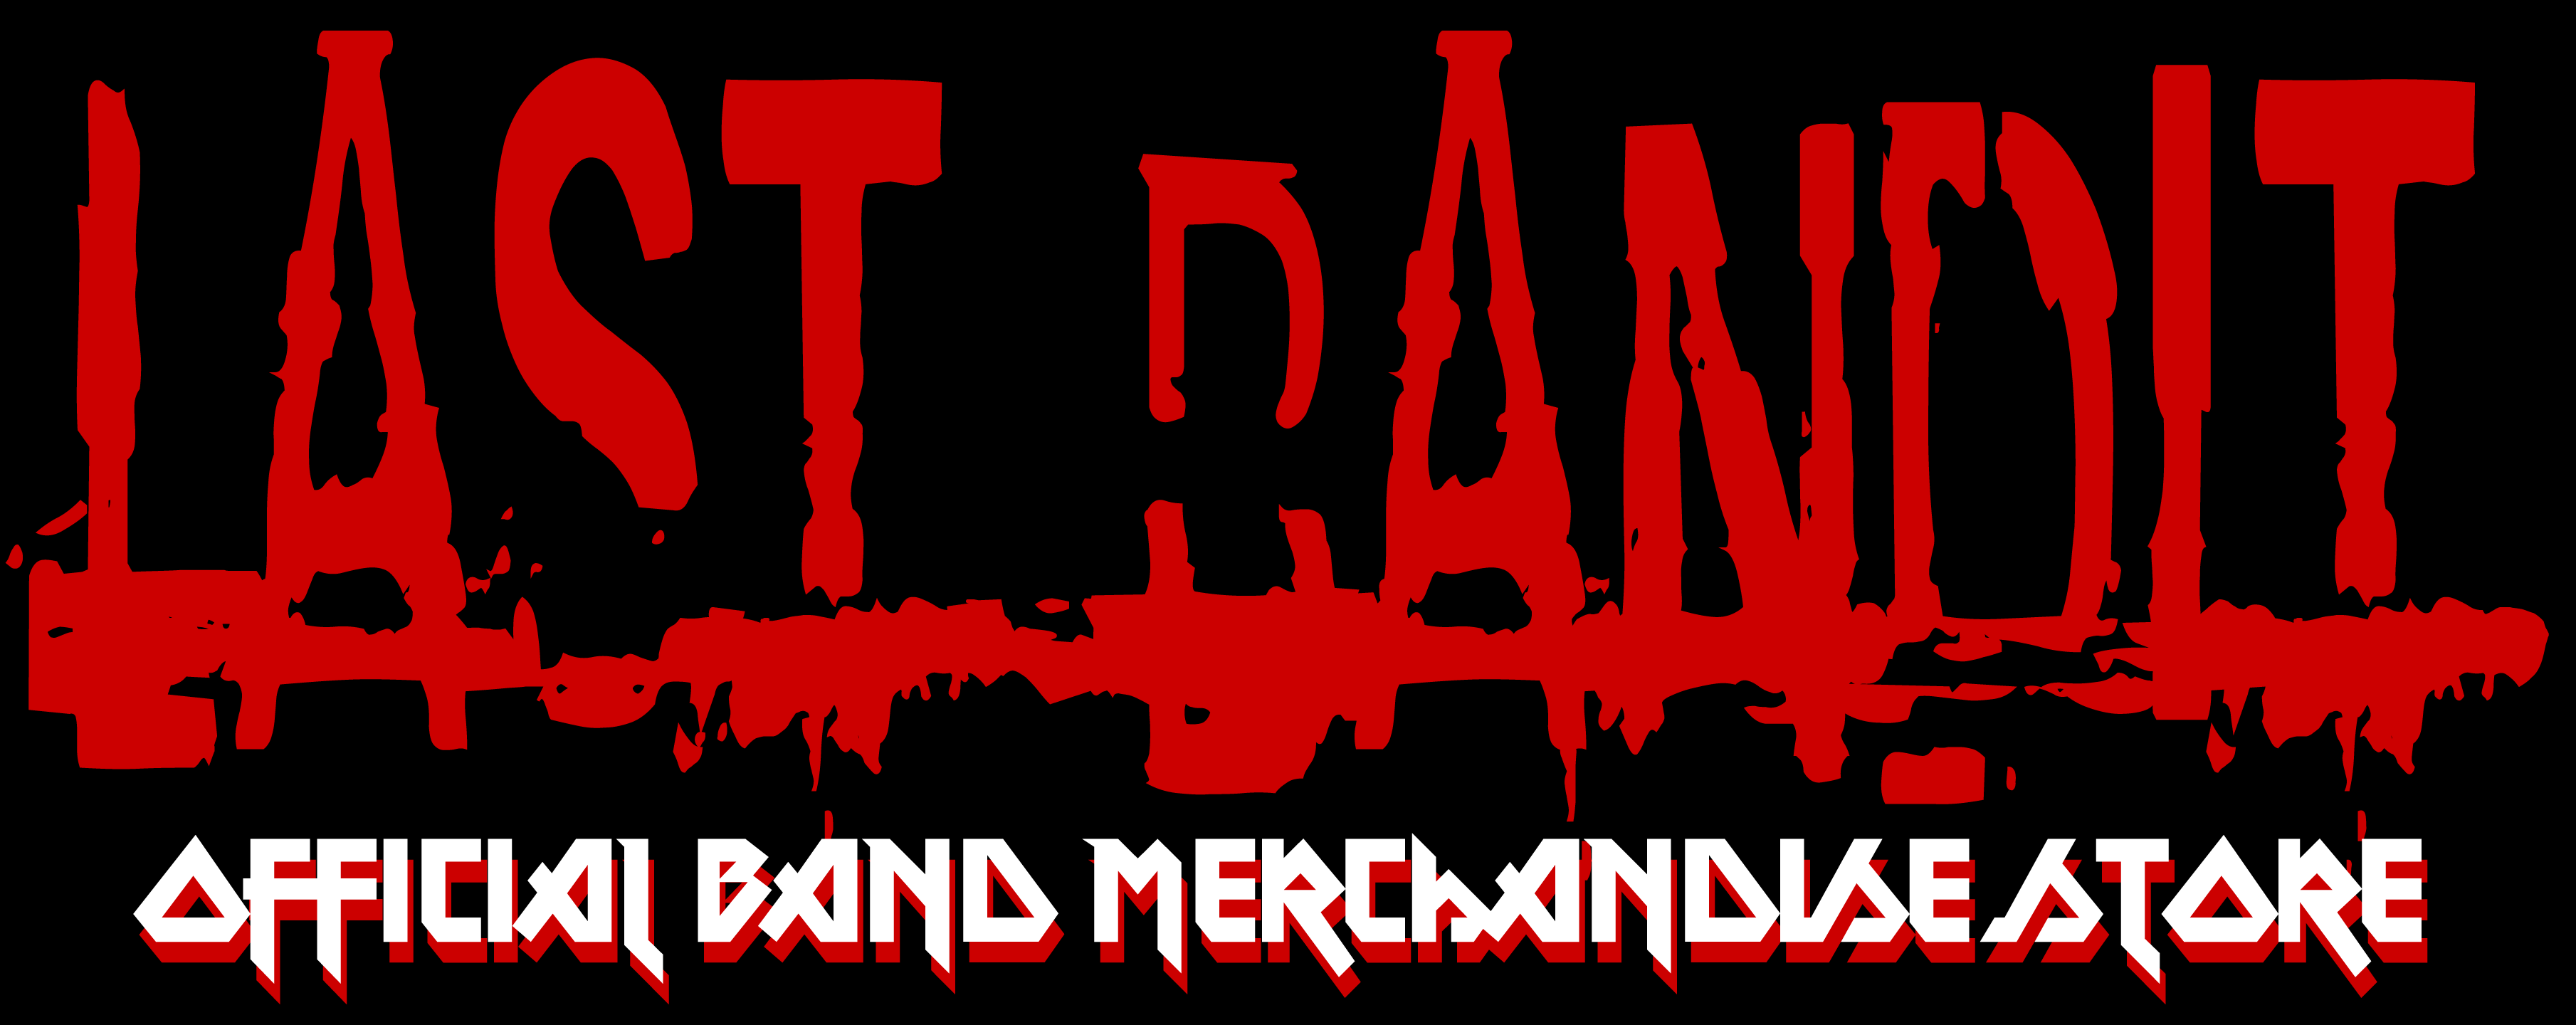 Rise Against Rock Am Ring Germany June 6th 10 Dvd Last Bandit ラスト バンディット バンドtシャツ ロックtシャツ 専門店